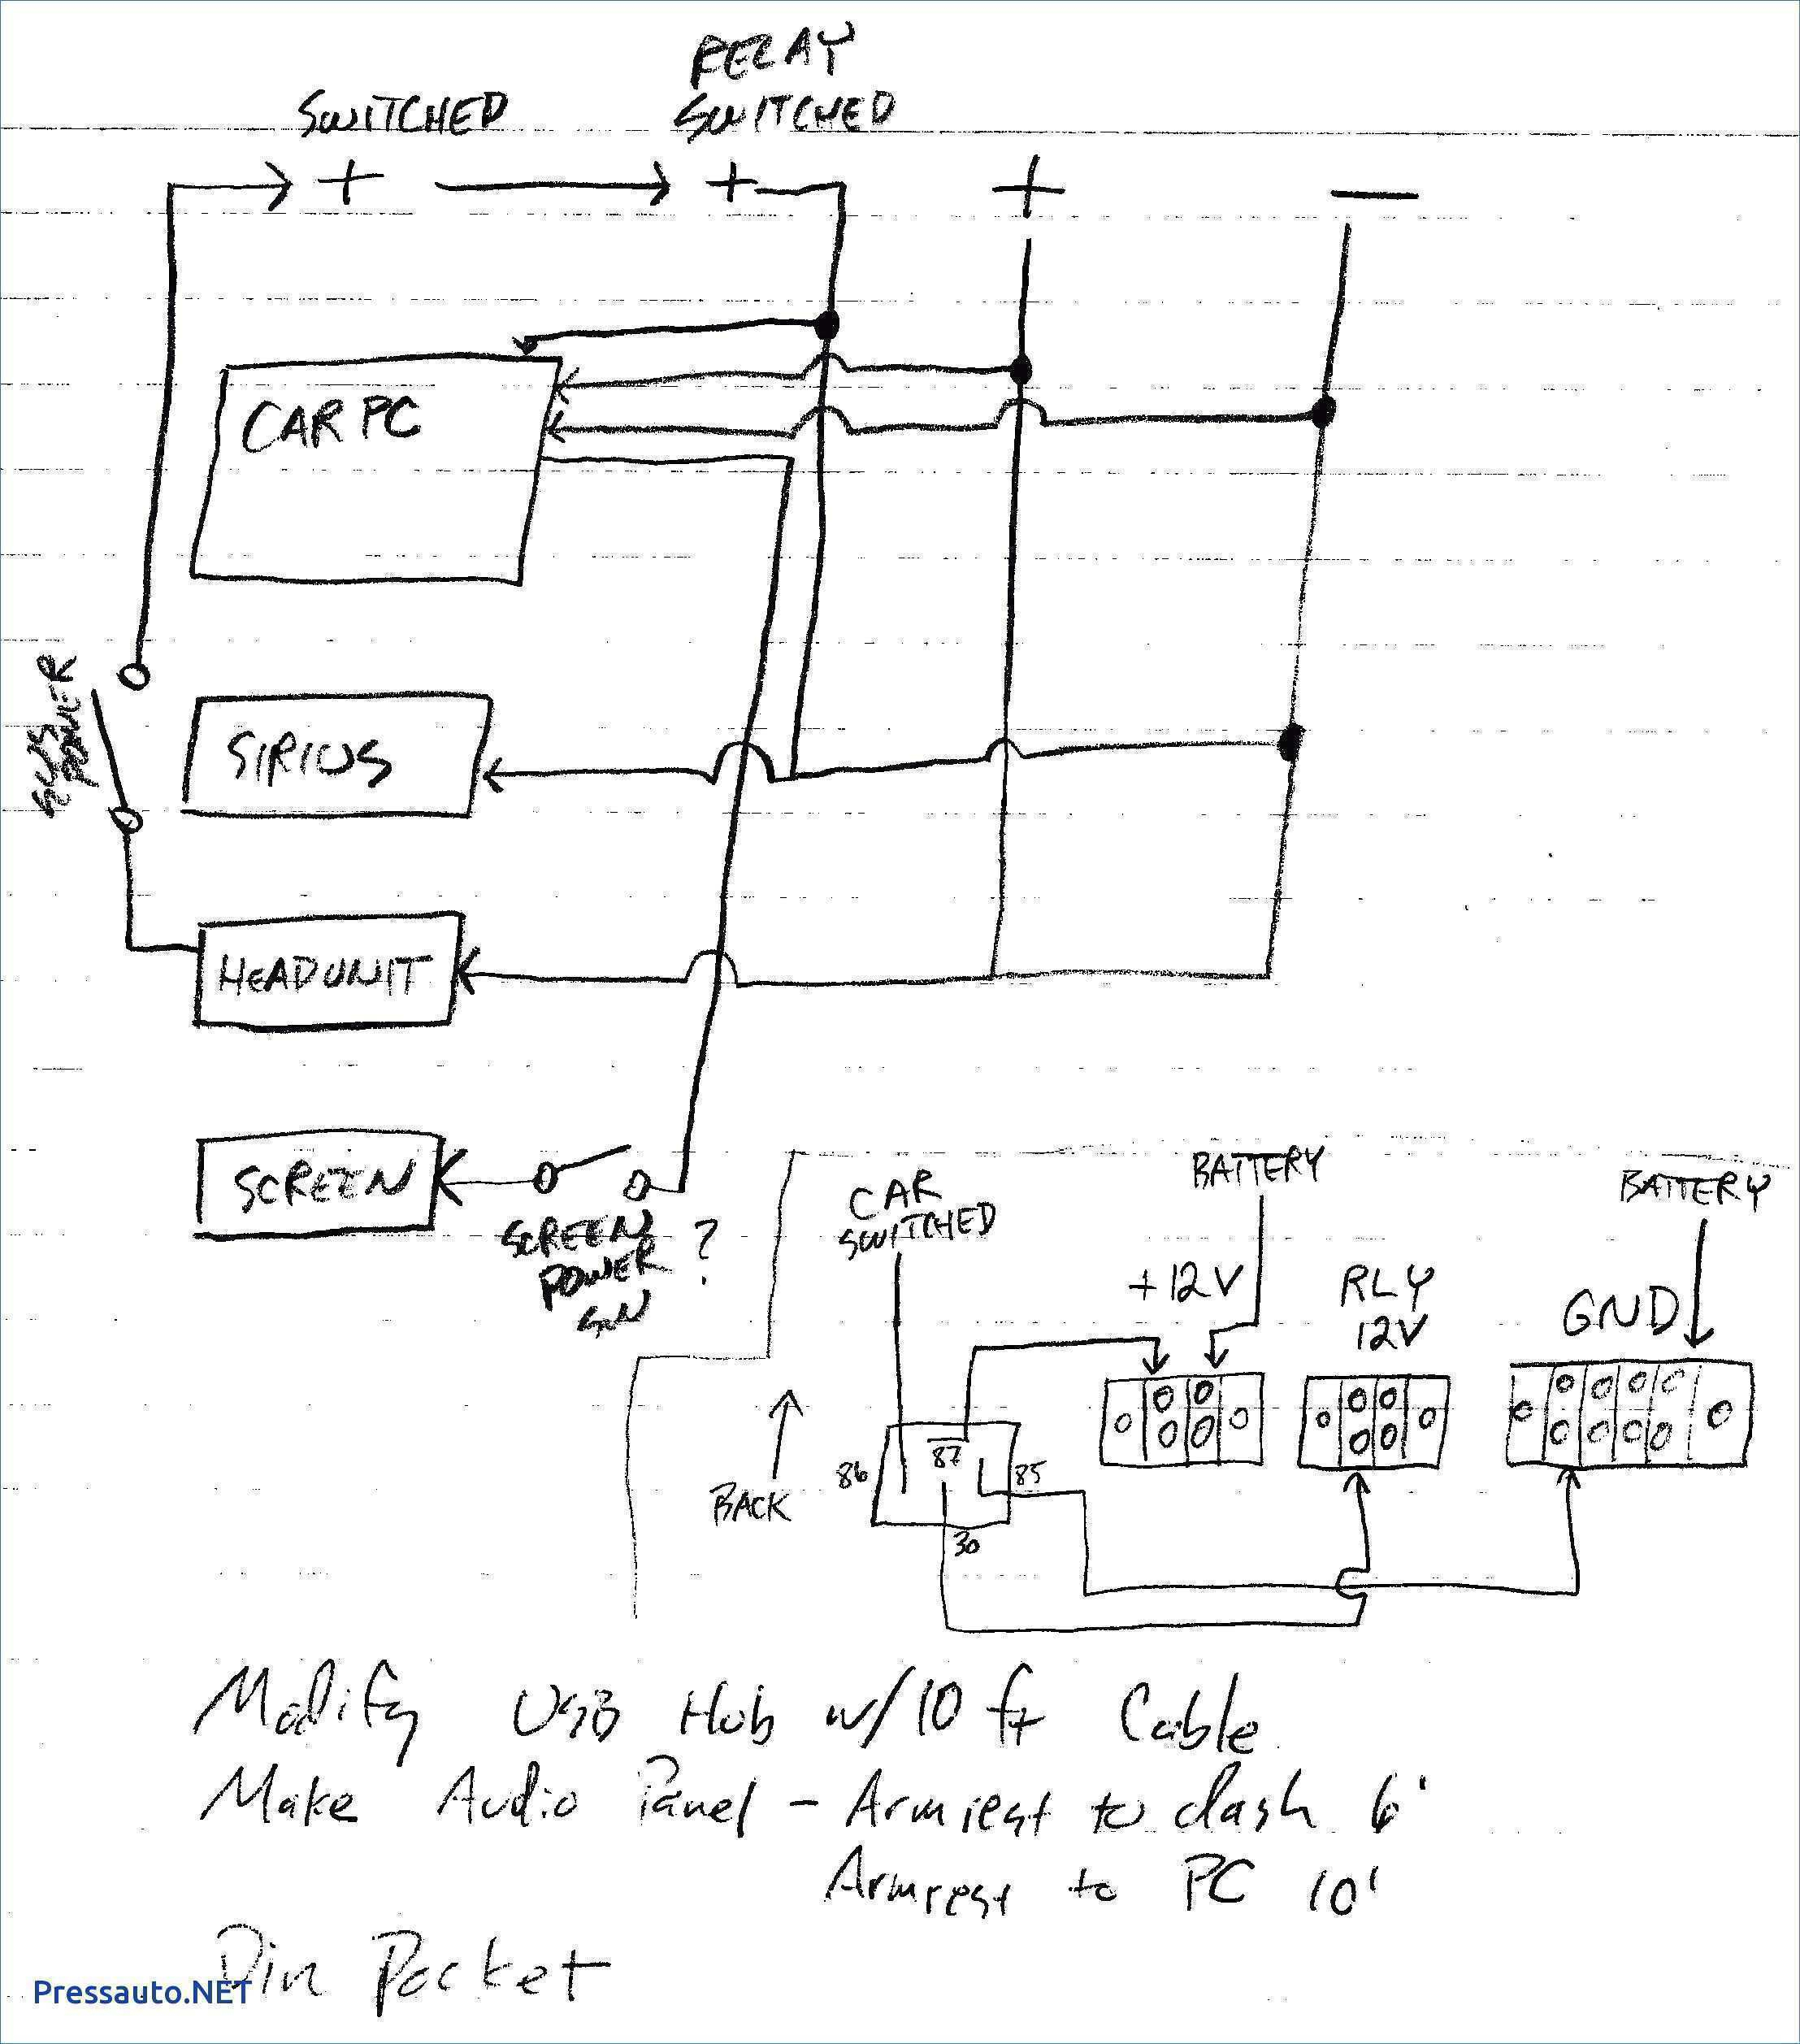 Meyer Plow Controller Wiring Diagram | Manual E-Books - Meyer E47 Wiring Diagram